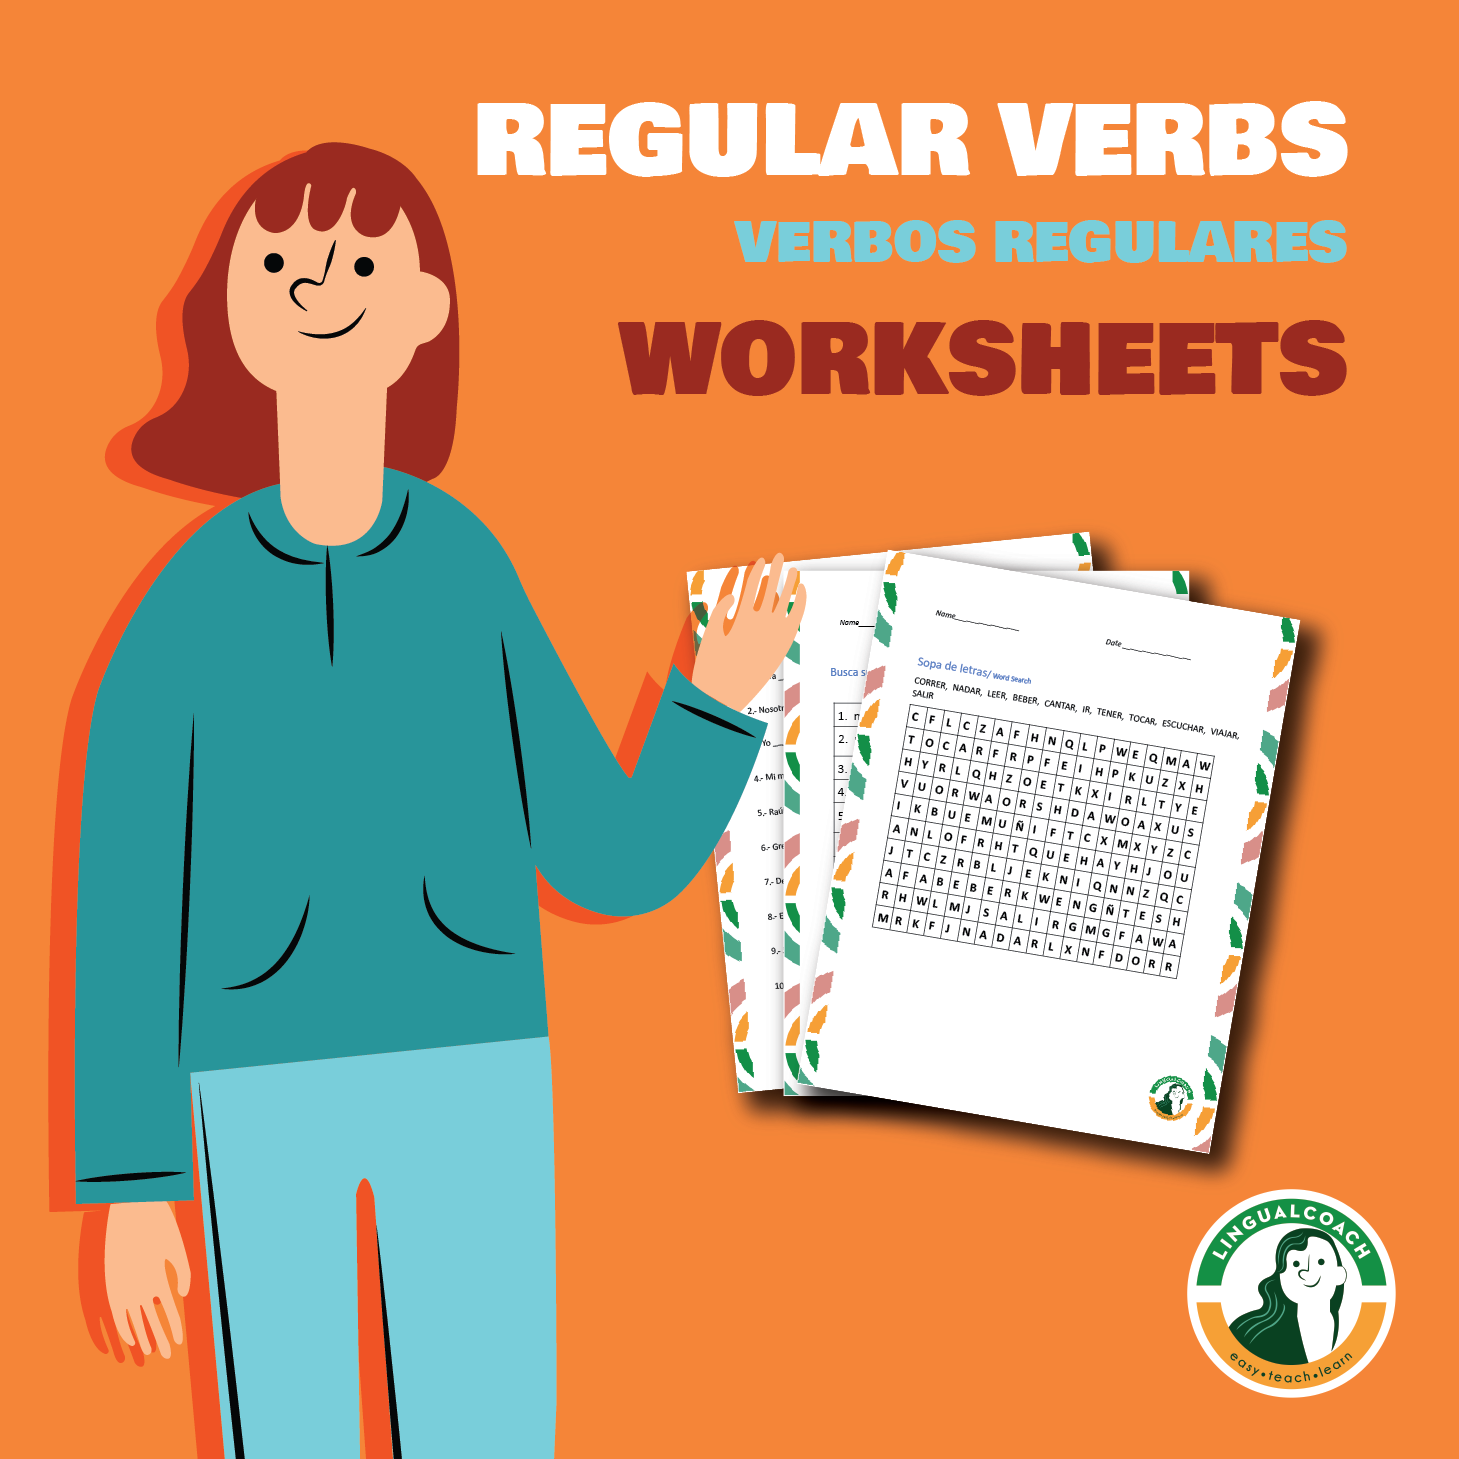 Spanish Regular Verbs Worksheets (Verbos Regulares)'s featured image